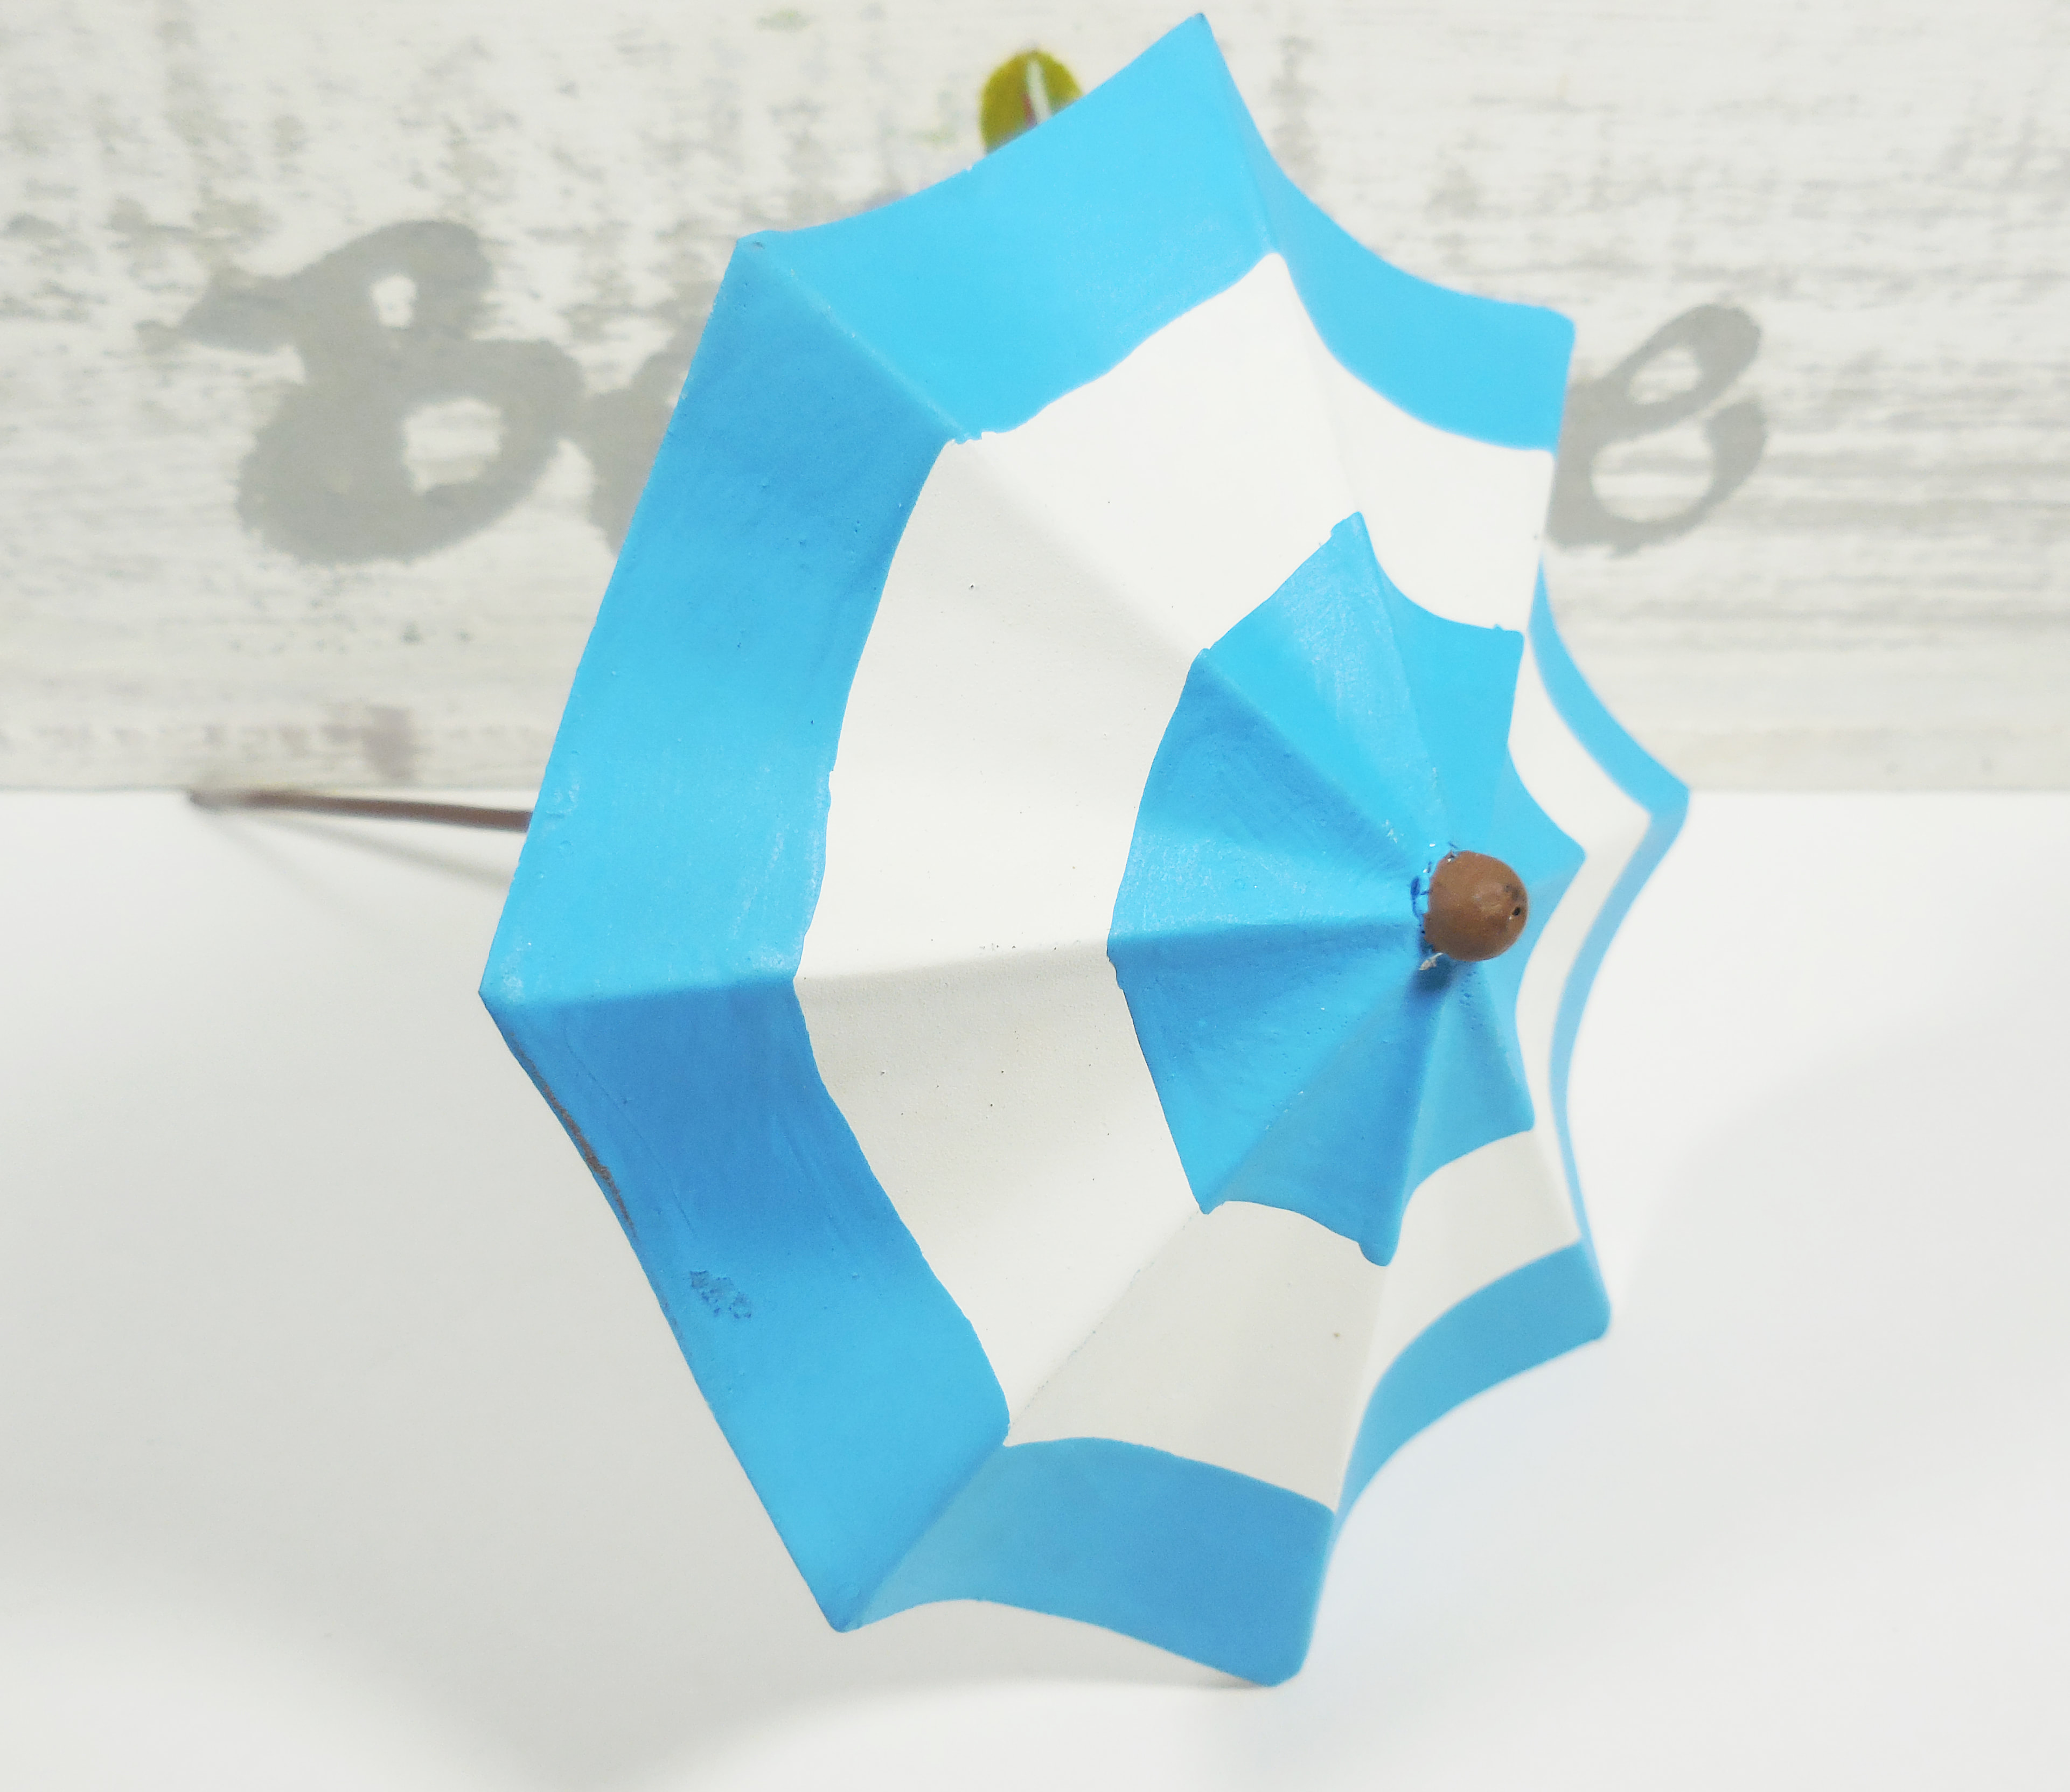 Miniature FAIRY GARDEN Accessories ~ Blue & White Striped Beach Umbrella ~ NEW 